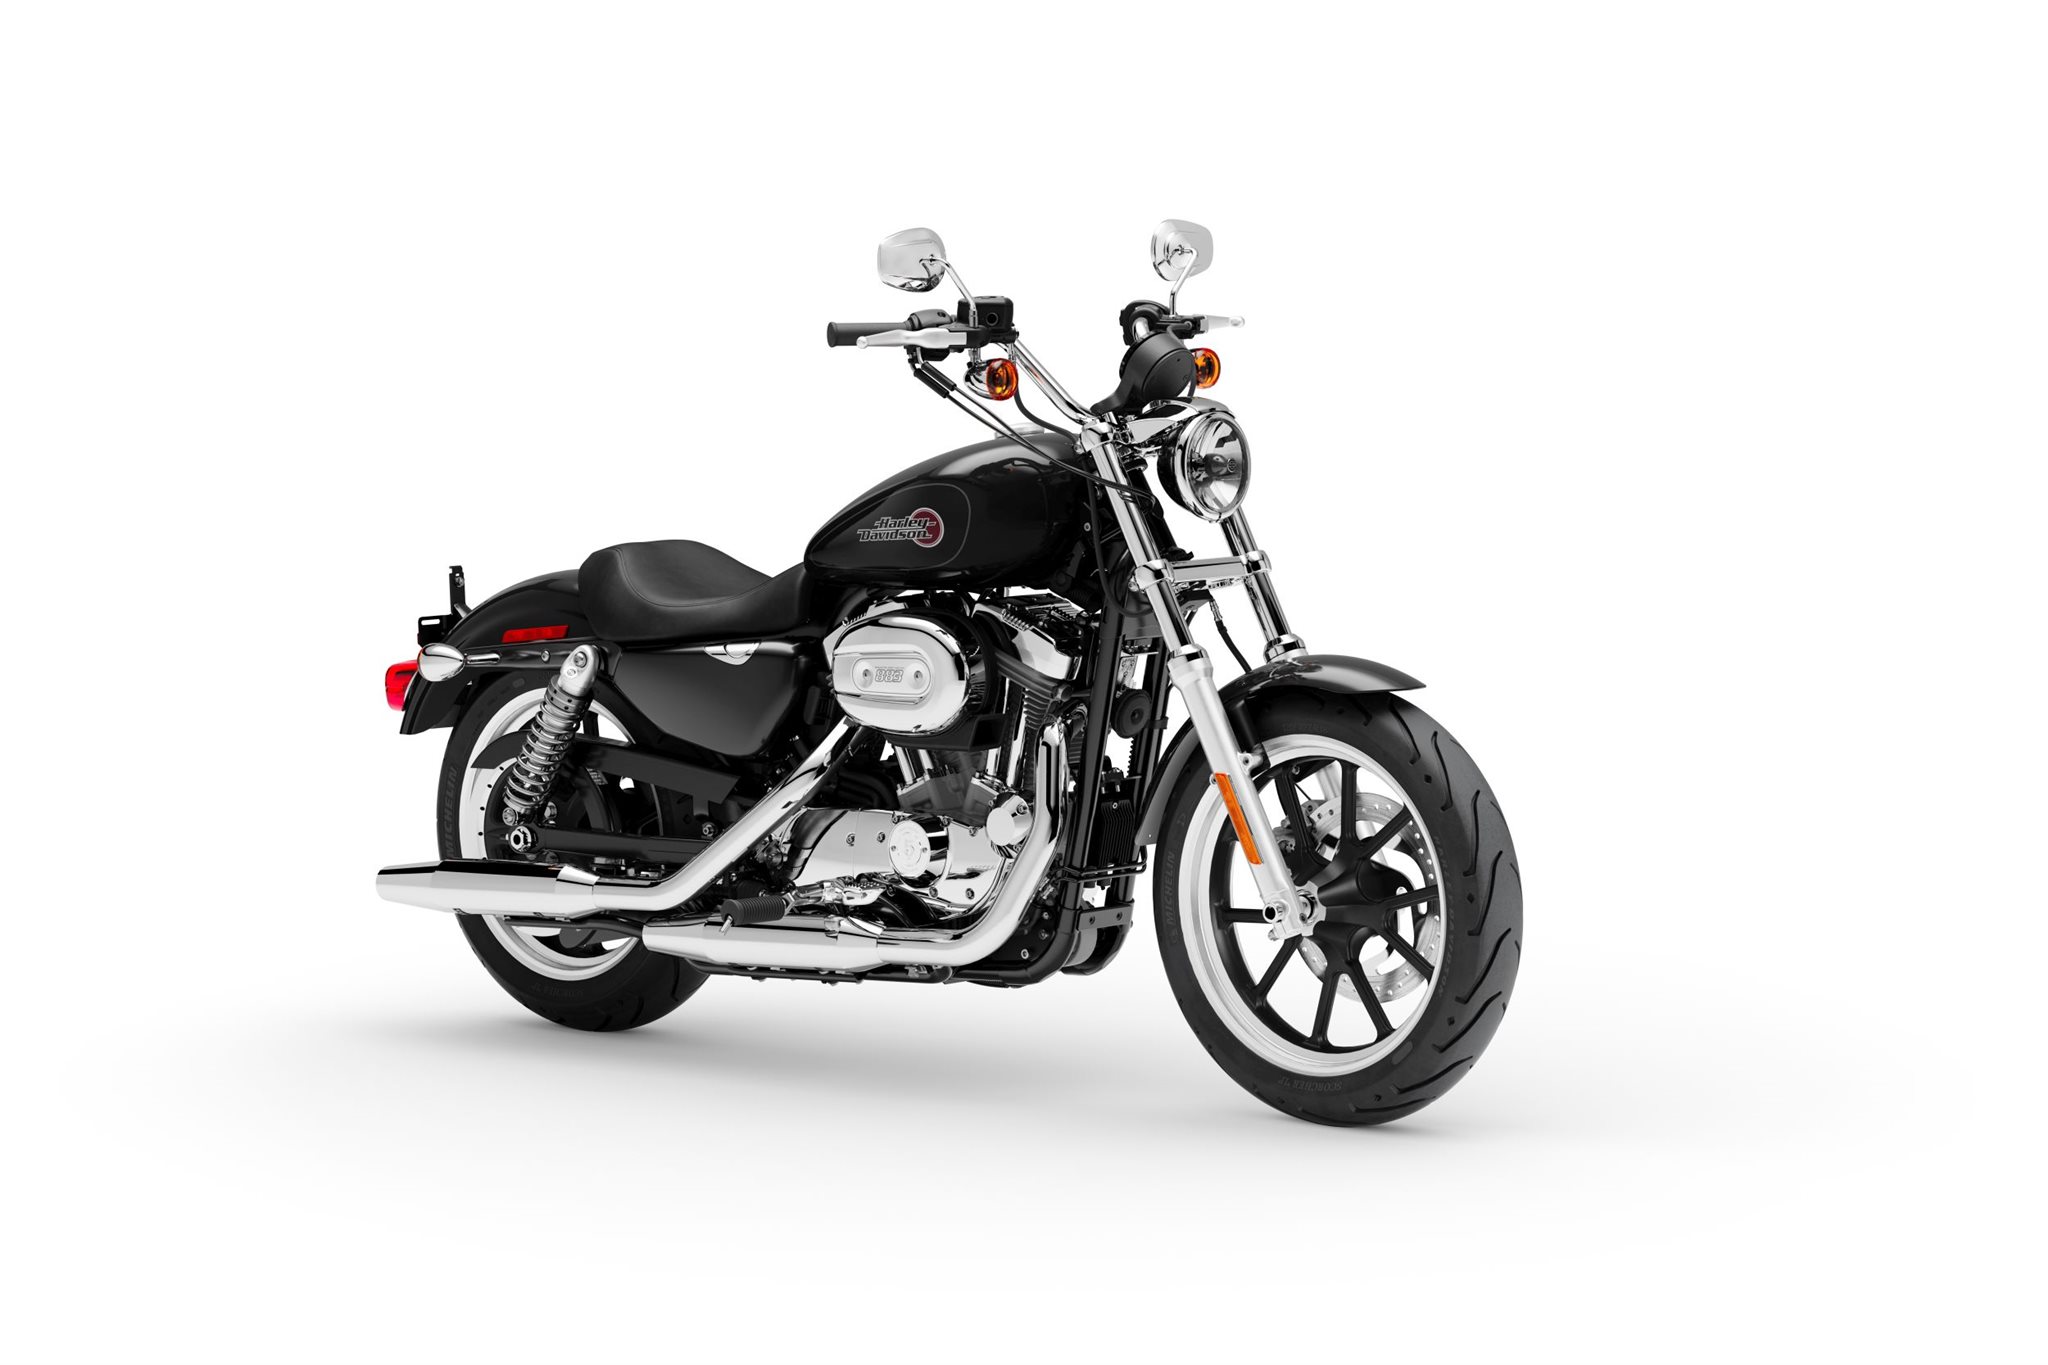 Motorrad Vergleich Harley Davidson Sportster Xl 883 L Superlow 2019 Vs Harley Davidson Sportster Xl 883 L Superlow 2012